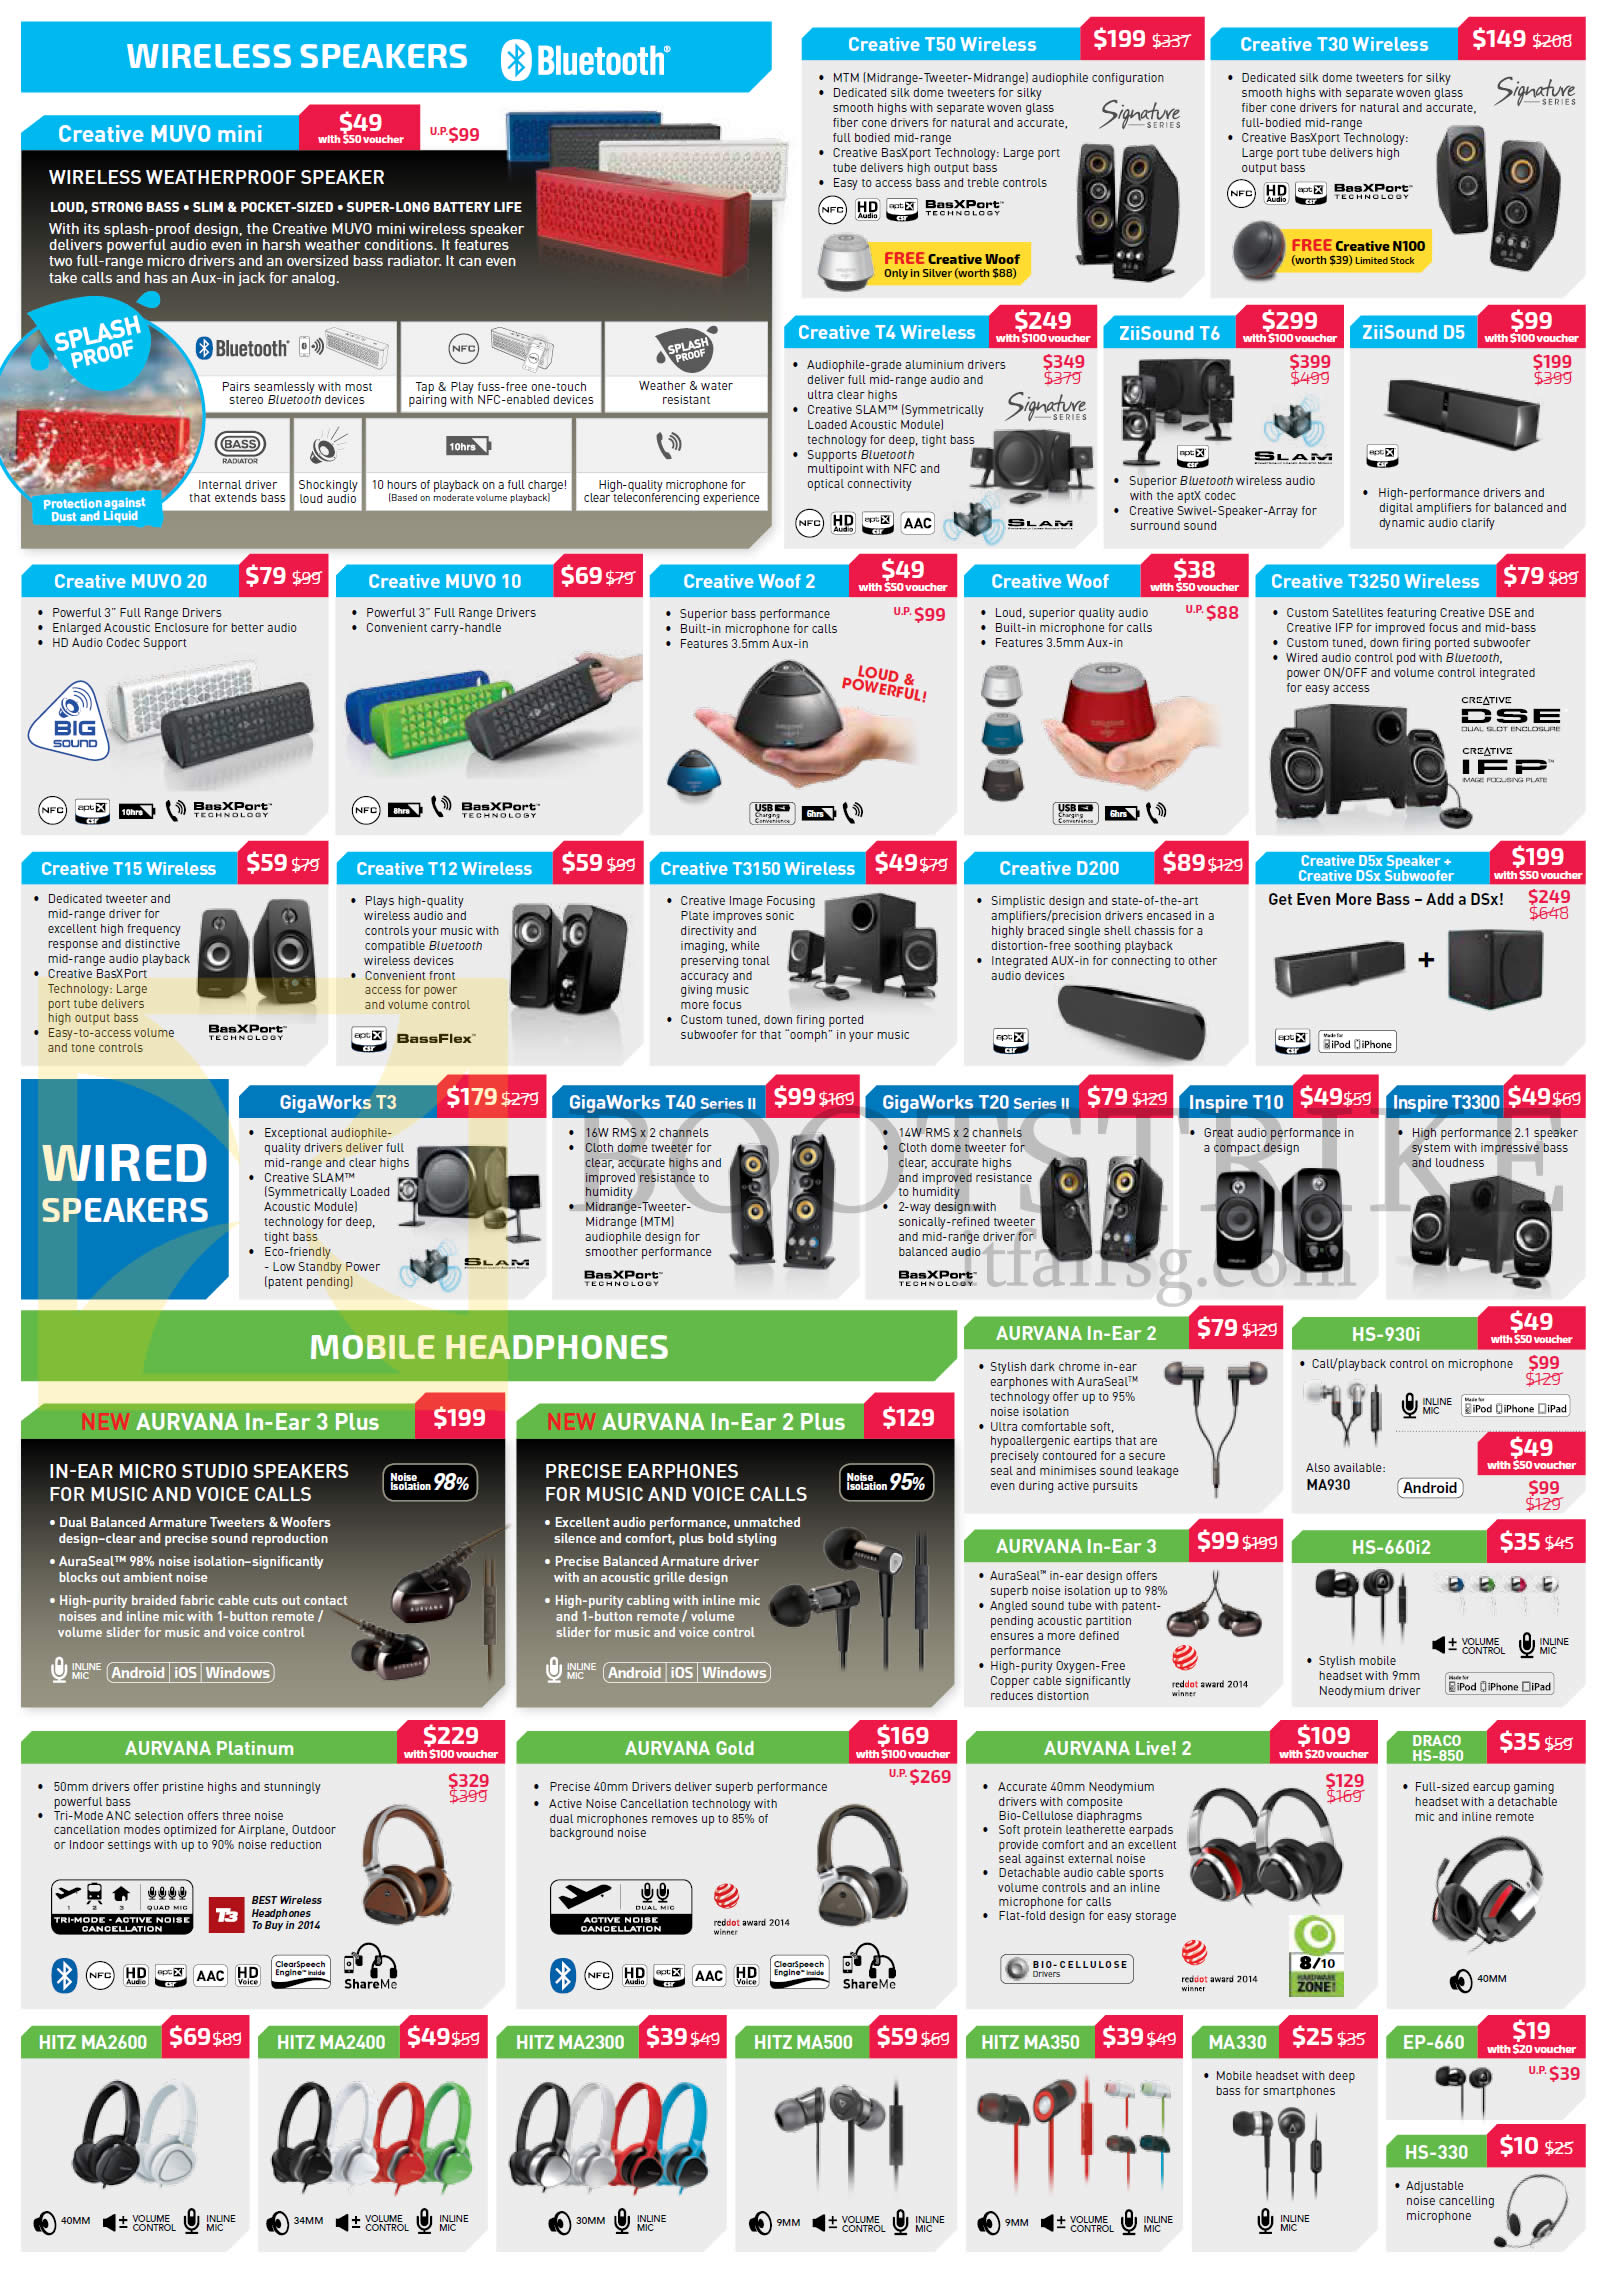 IT SHOW 2015 price list image brochure of Creative Wireless Speakers, Wired Speakers, Mobile Headphones, Earphones Muvo 20, Woof 2, T3150 Wireless, Gigaworks T40, T20, T3, Aurvana Platinum, Hitz